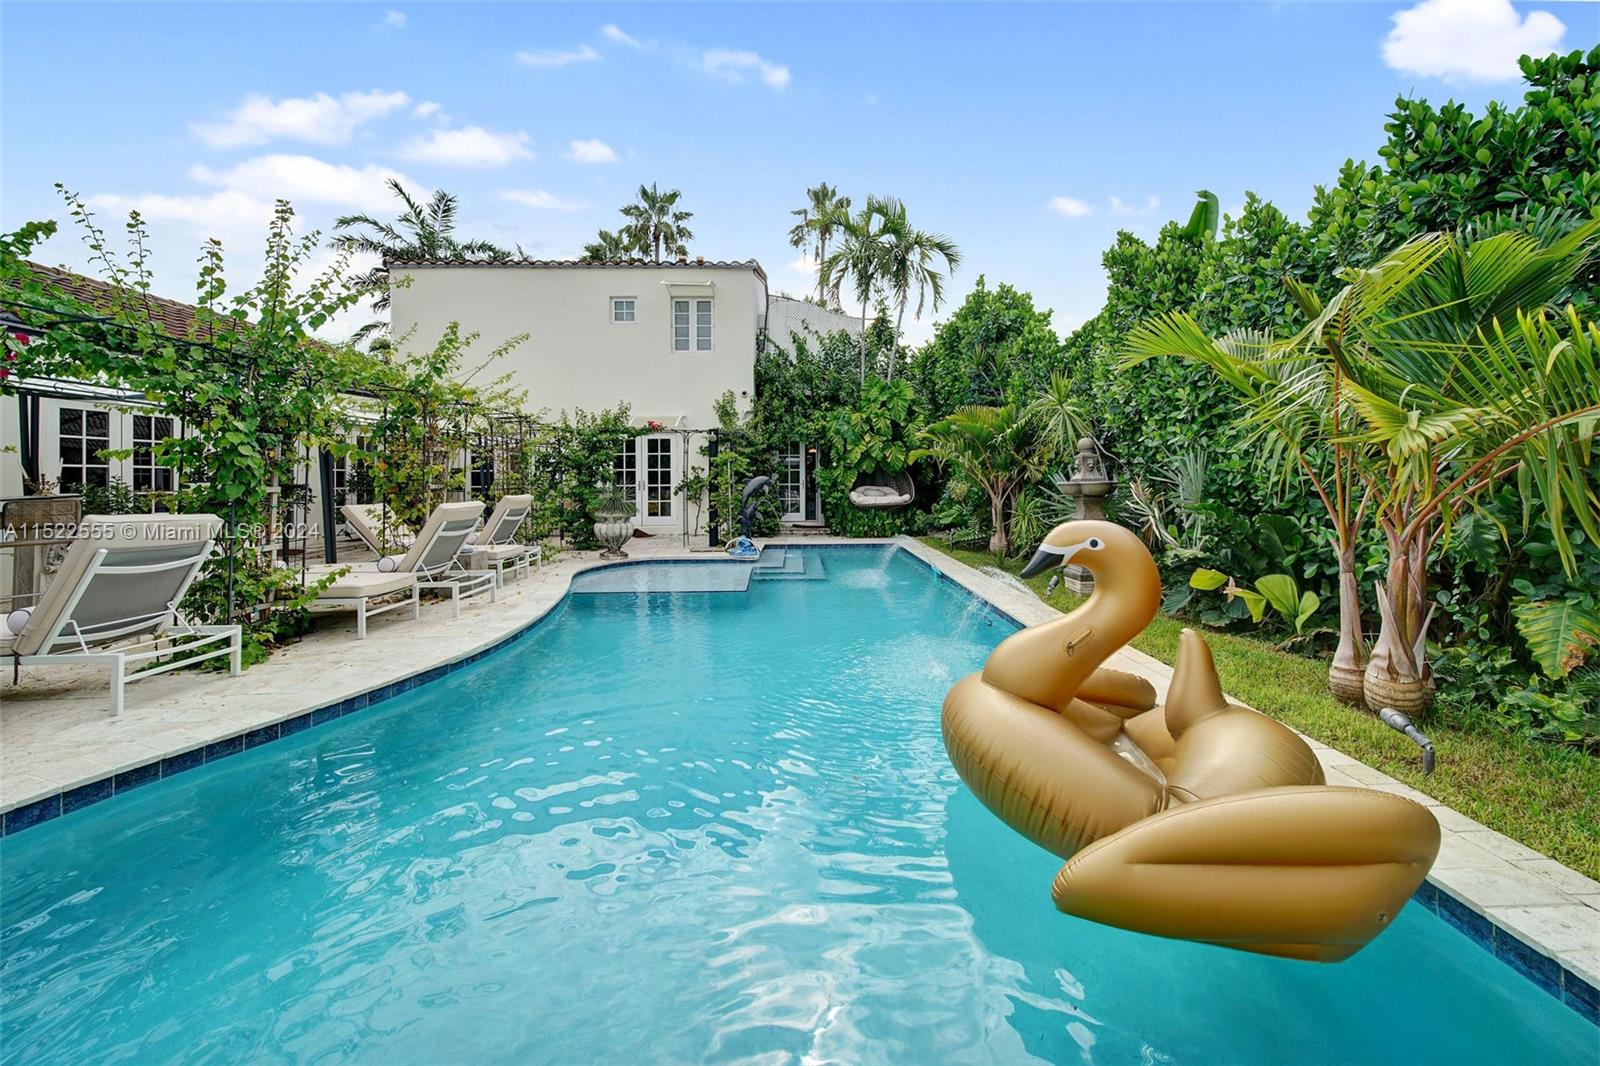 Property for Sale at 1244 Michigan Ave, Miami Beach, Miami-Dade County, Florida - Bedrooms: 5 
Bathrooms: 4  - $3,795,000